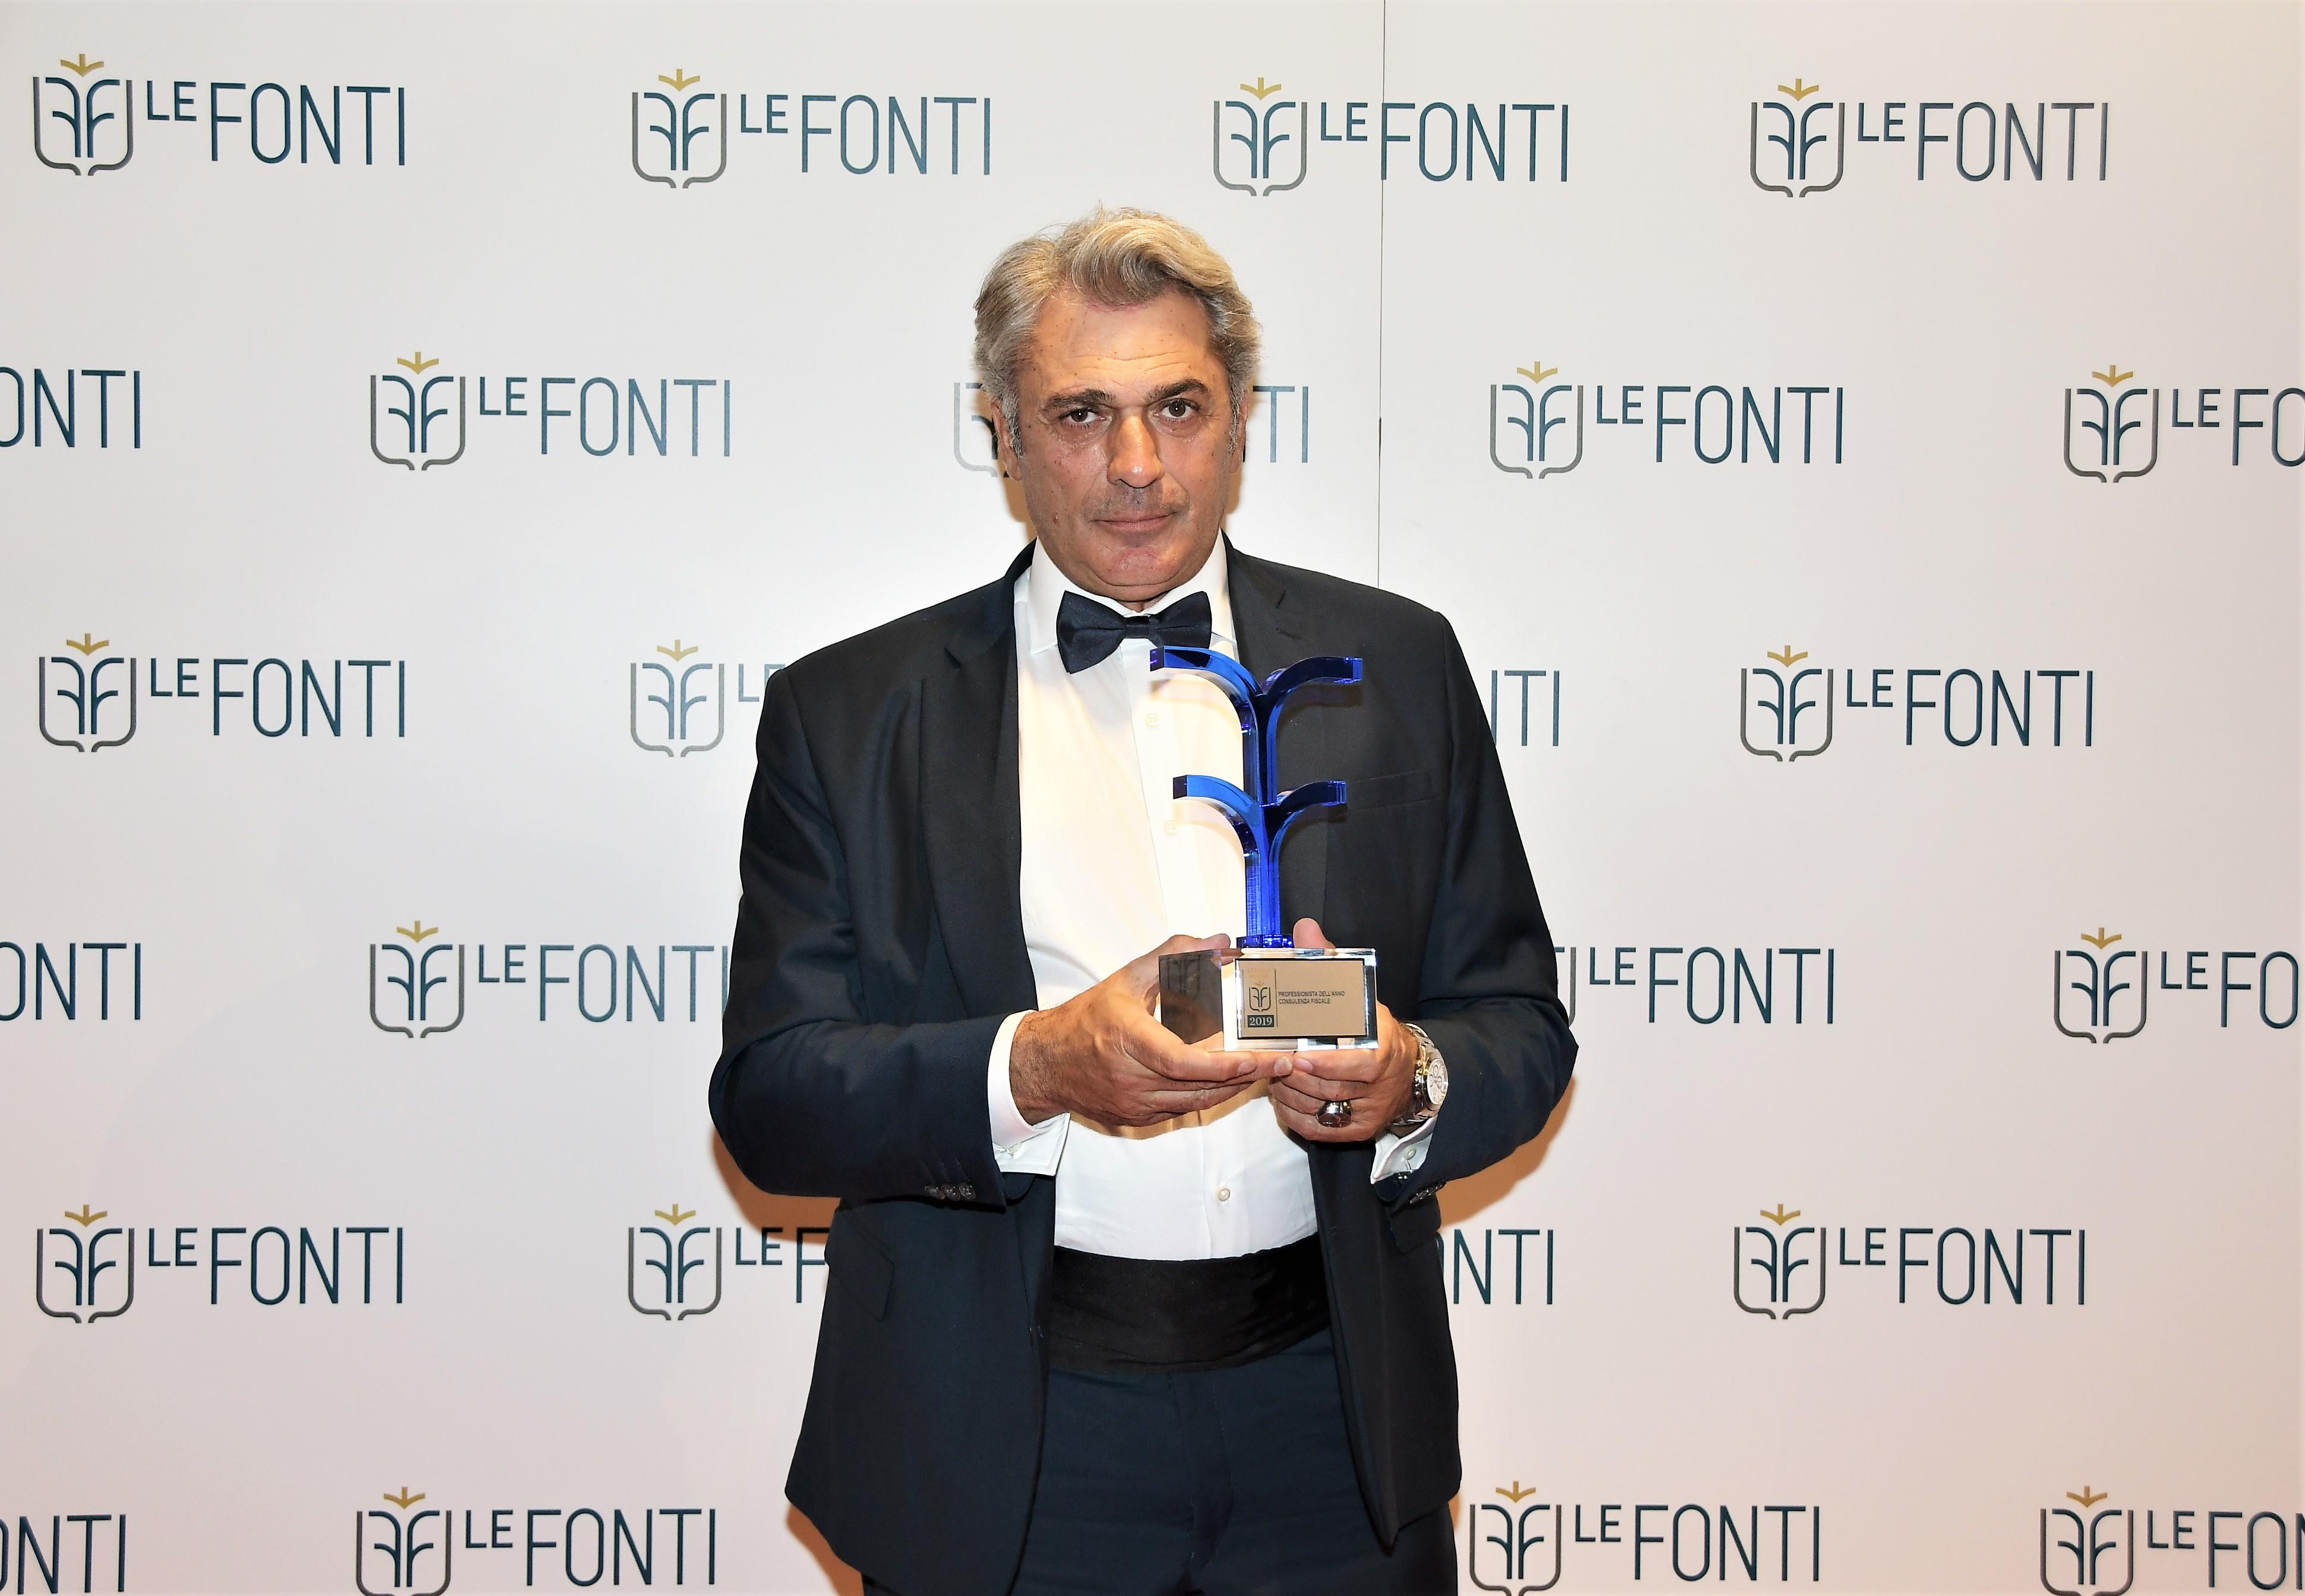 Gulisano & Partners Vincitori di Le Fonti Awards 2019